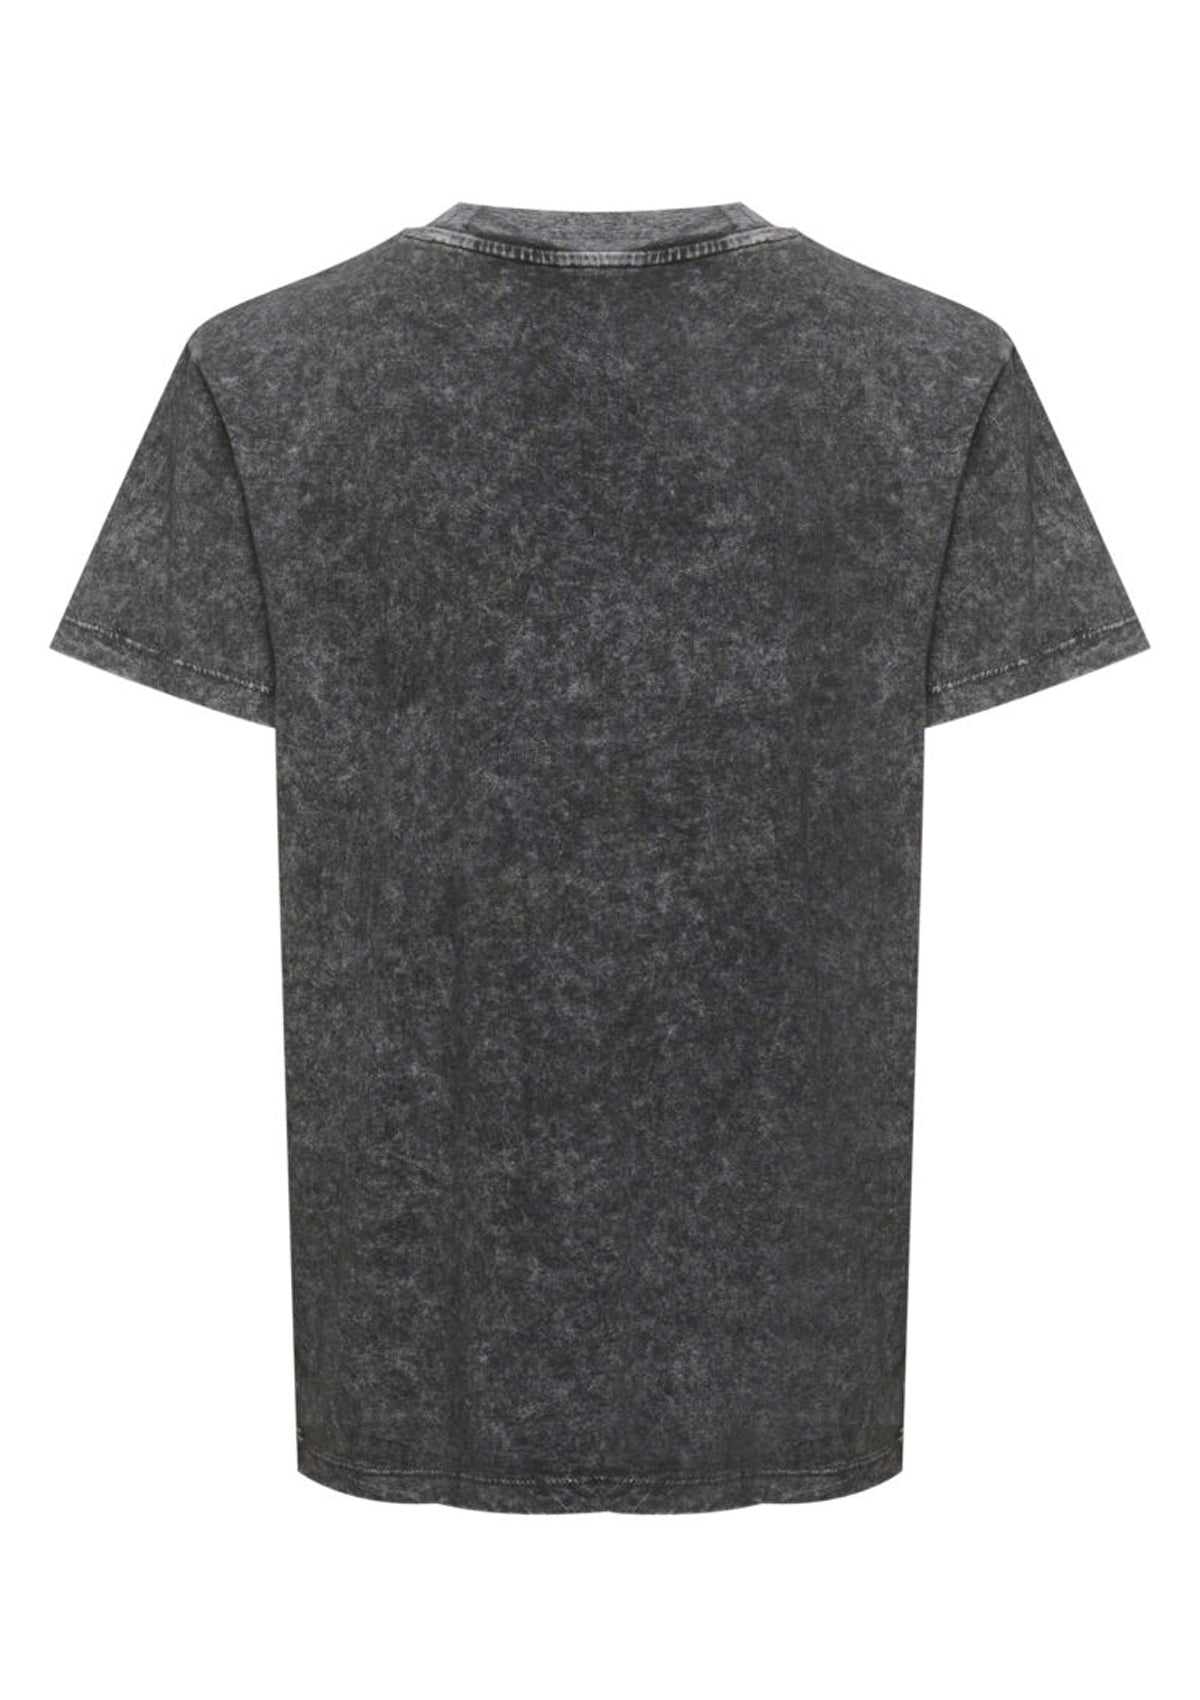 My Essential Wardrobe Hanne Diamond T-shirt Black Wash